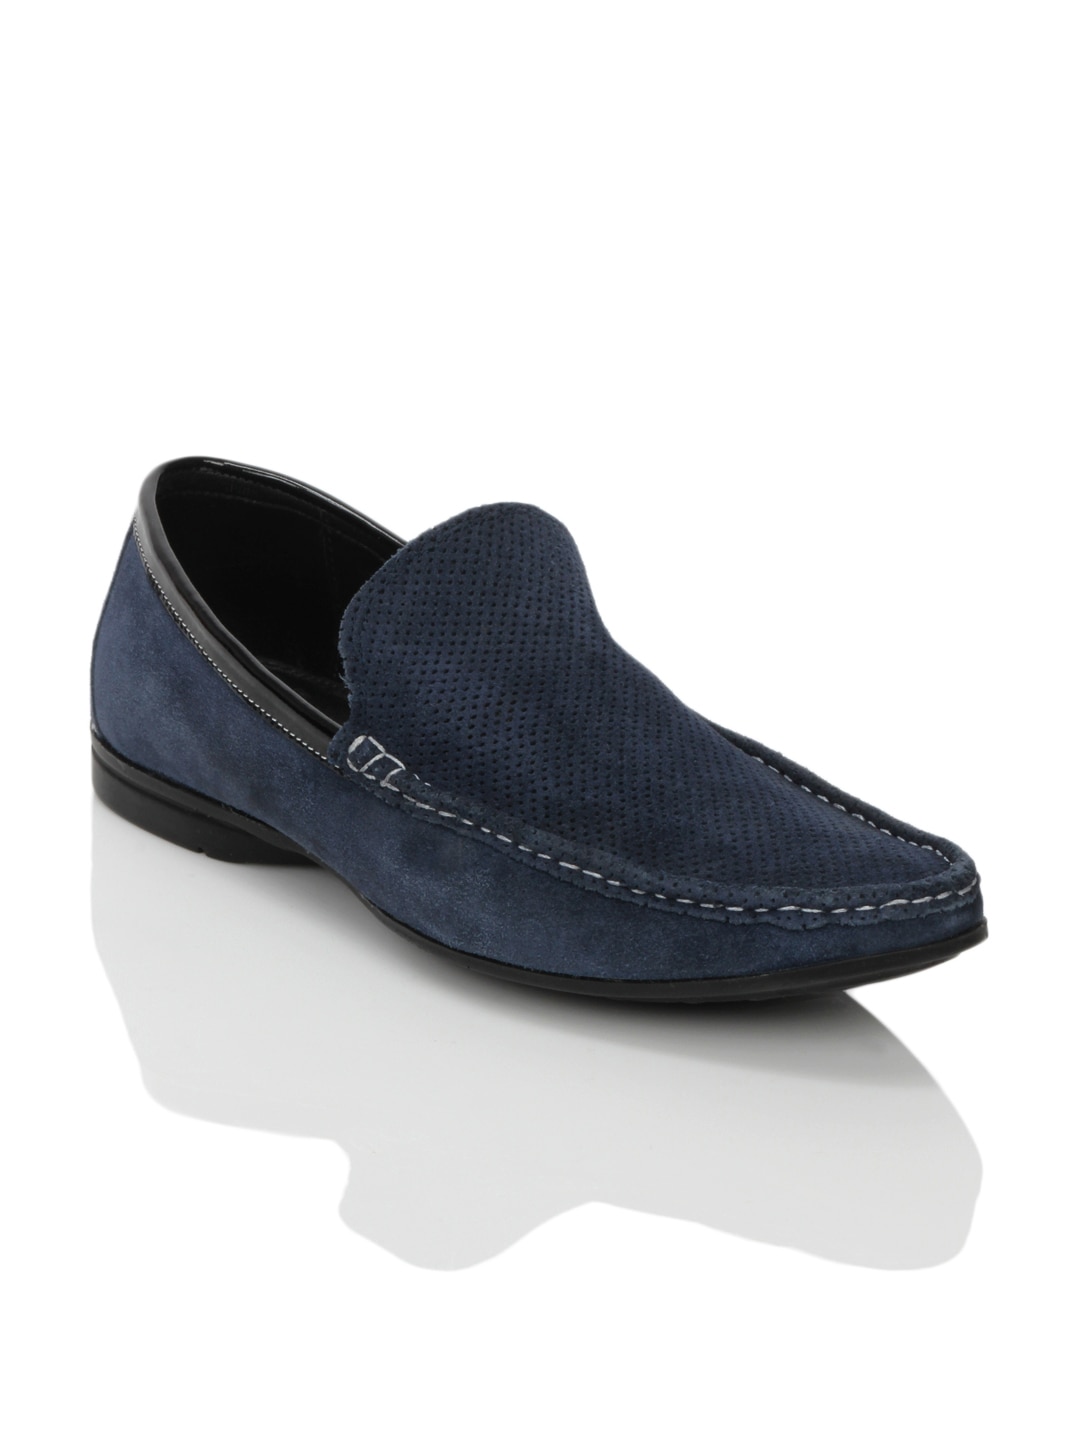 Franco Leone Men Slip On Navy Blue Shoes